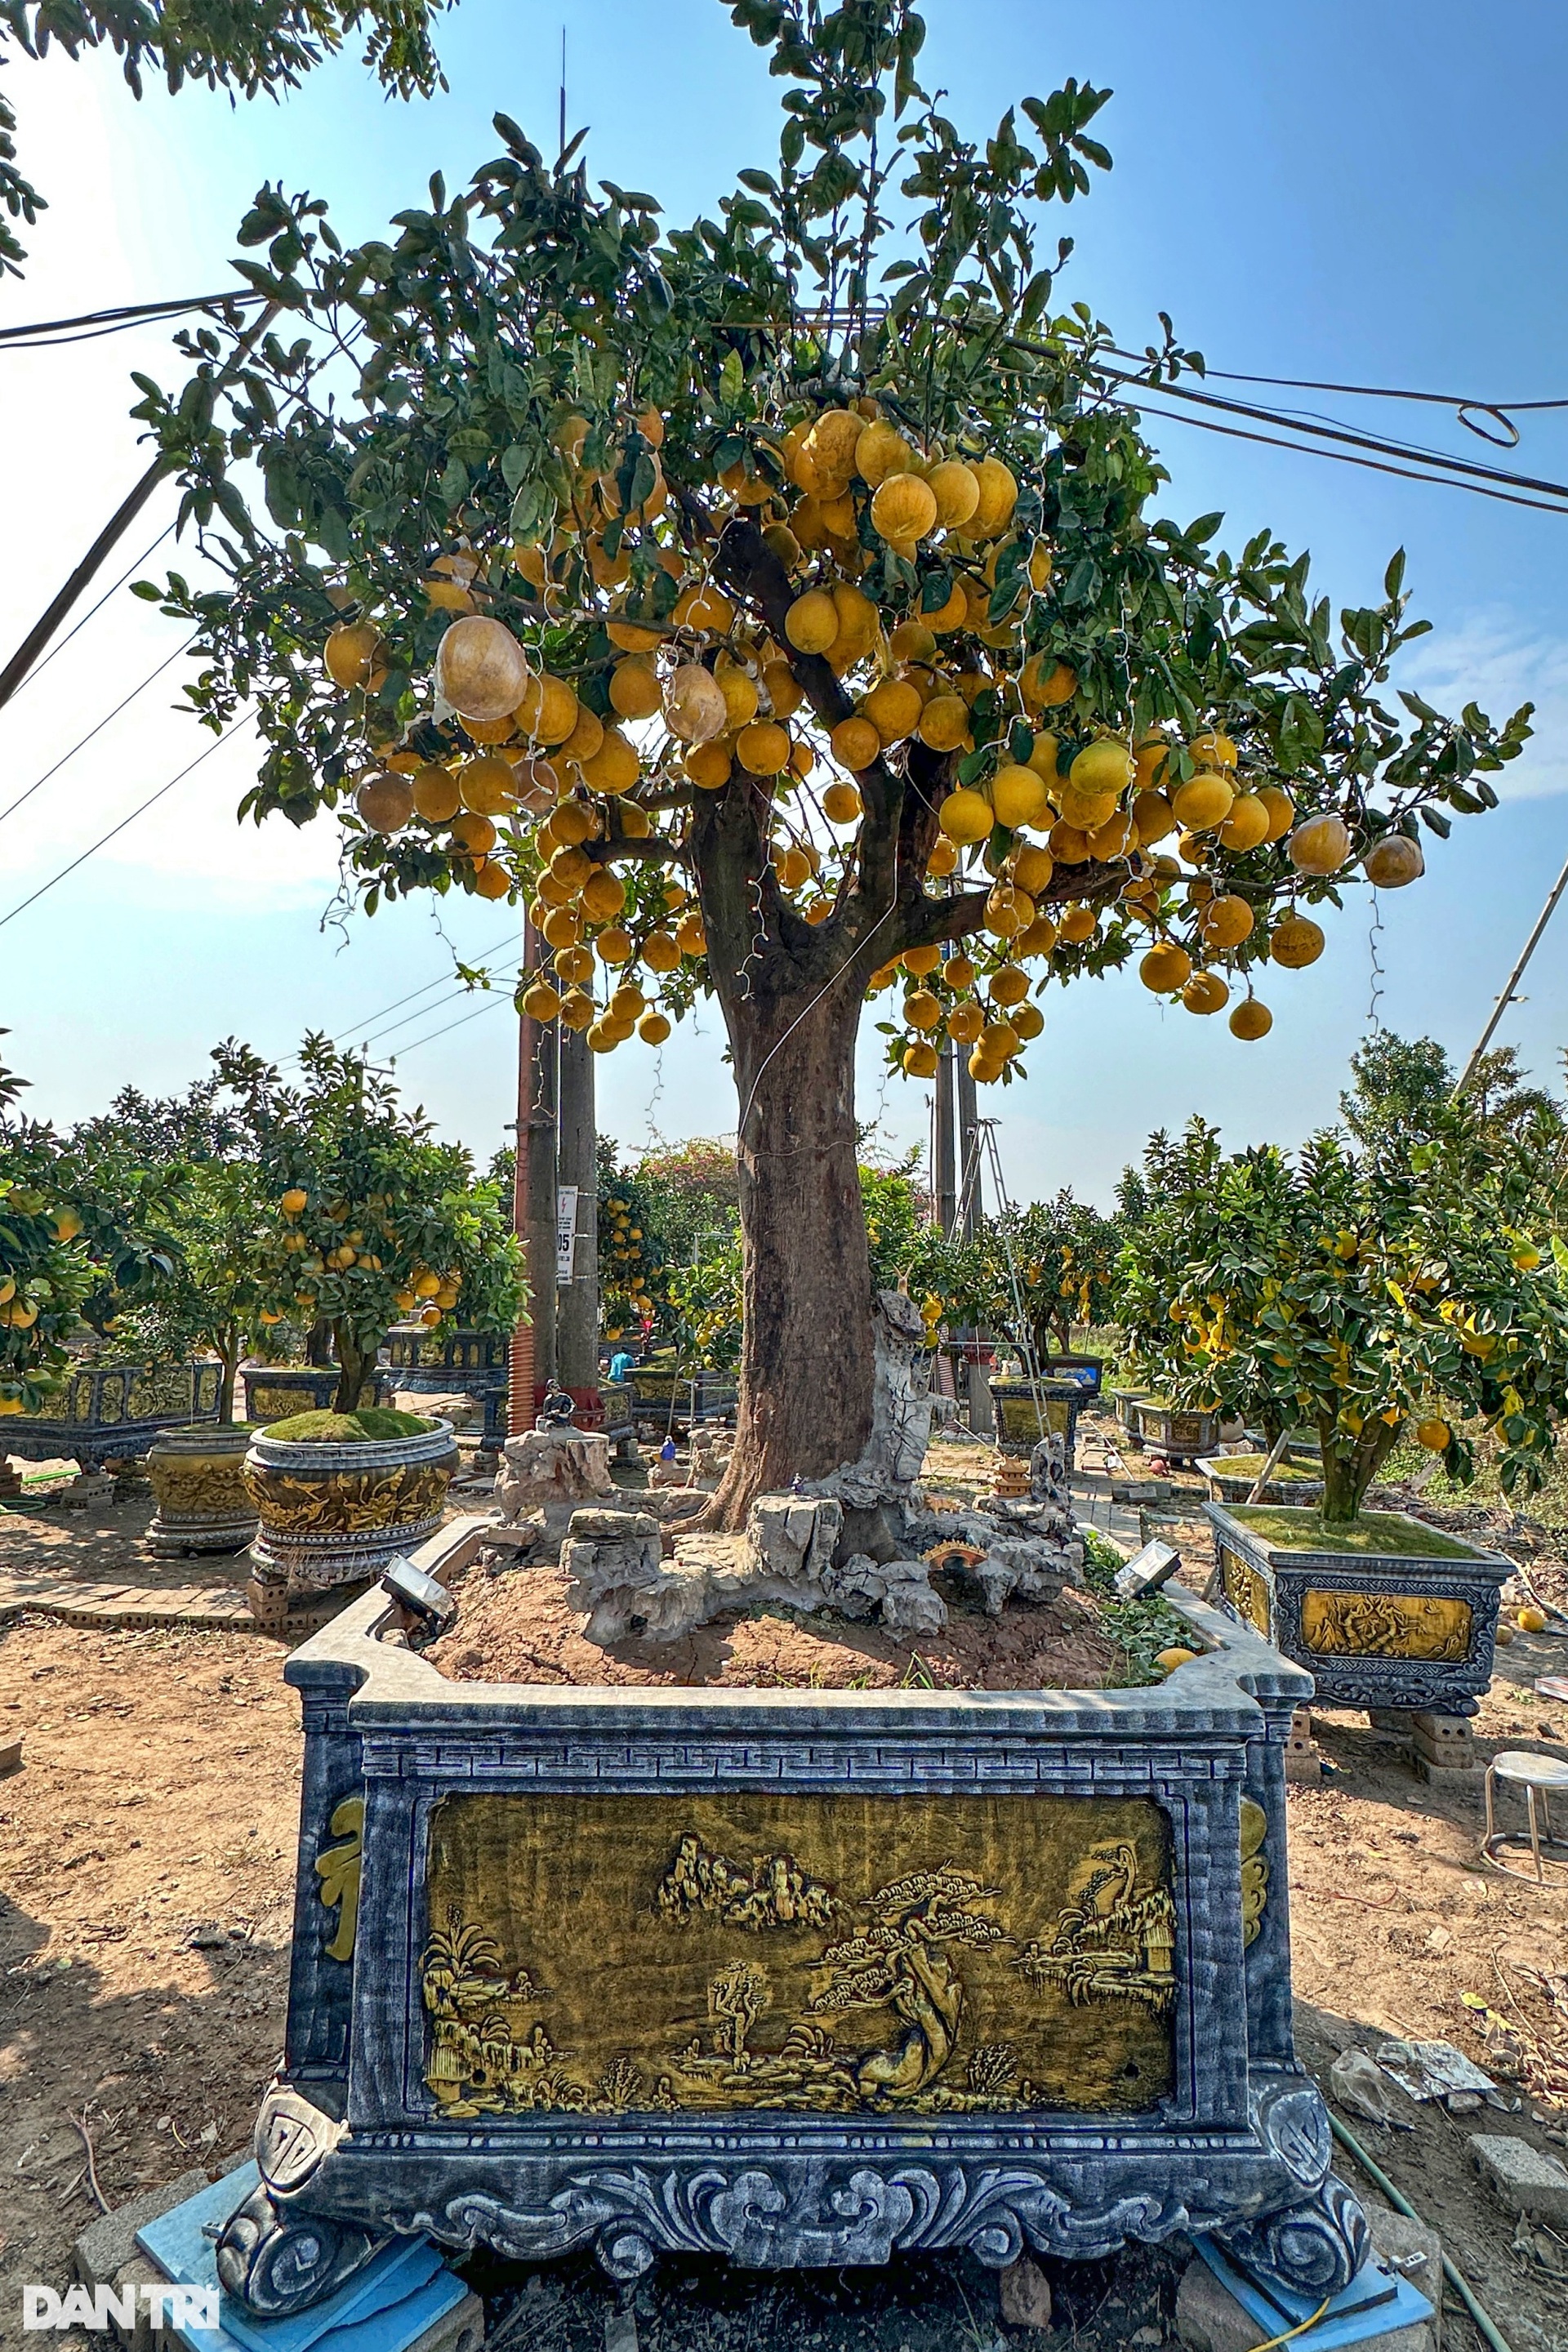 Unique 400-fruit Dien pomelo tree for sale for 200 million dong in Hanoi - 6